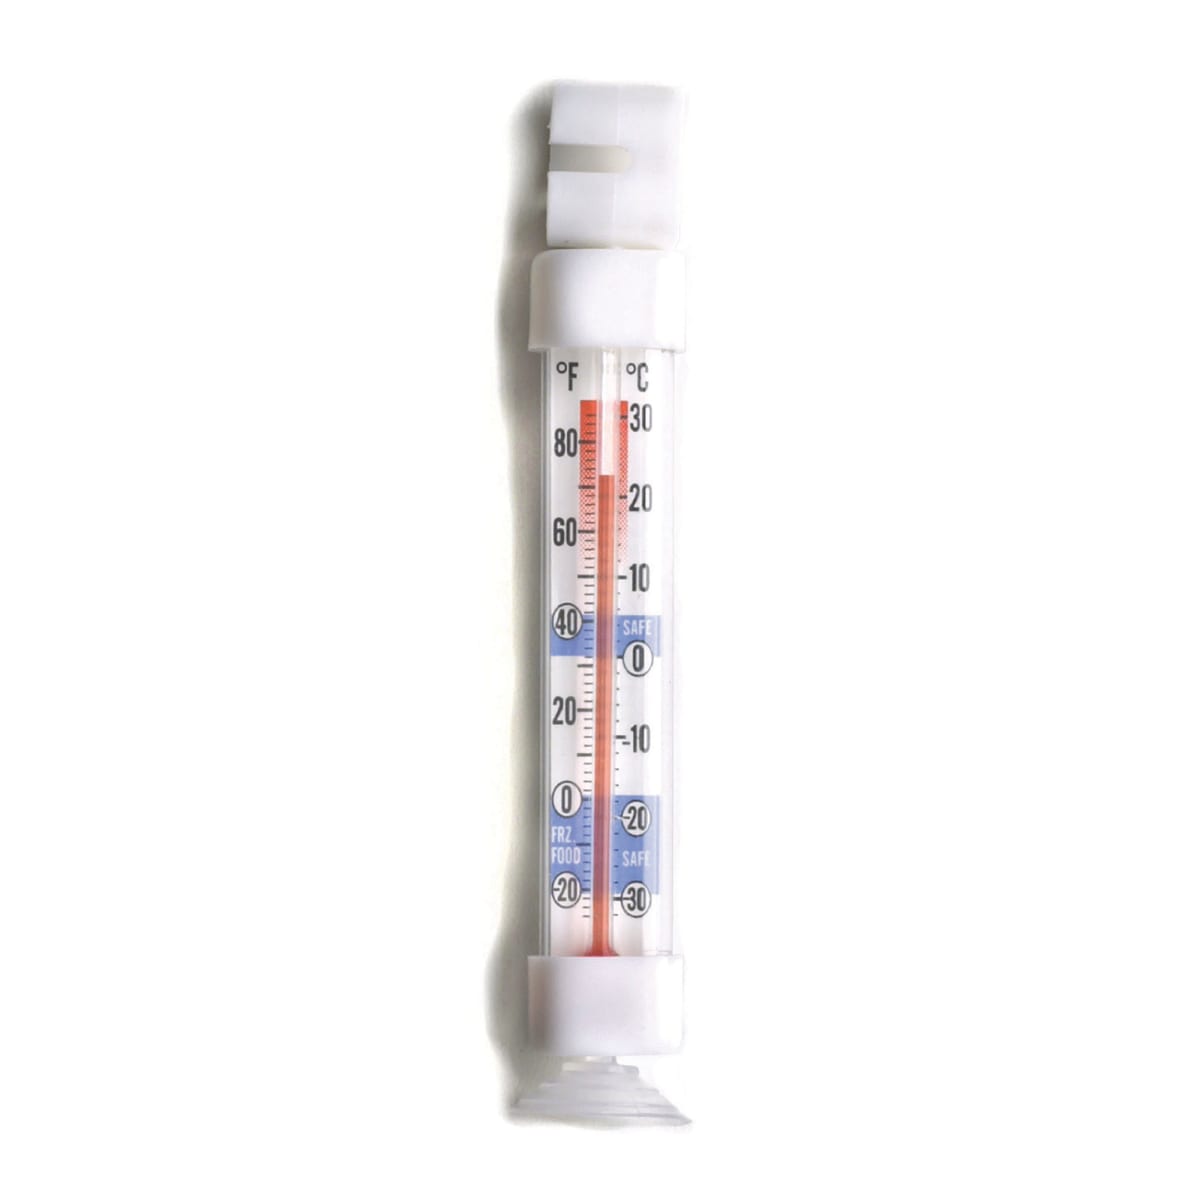 Taylor 3509 Refrigerator/Freezer Thermometer